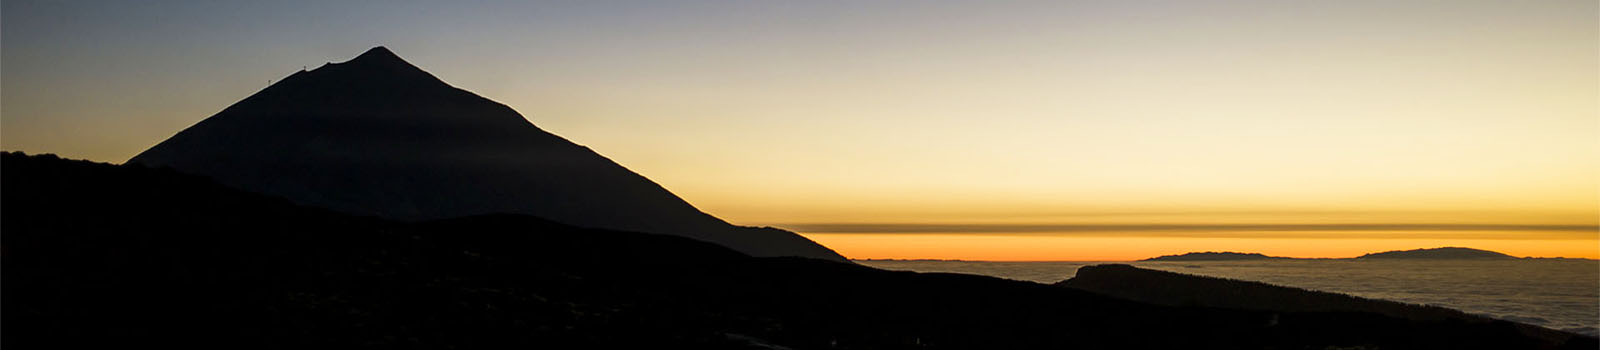 Sonnenuntergang am Teide Teneriffa – darunter des Wolkenmeer des "Bosque termófilo" – La Palma ragt aus den Wolken.